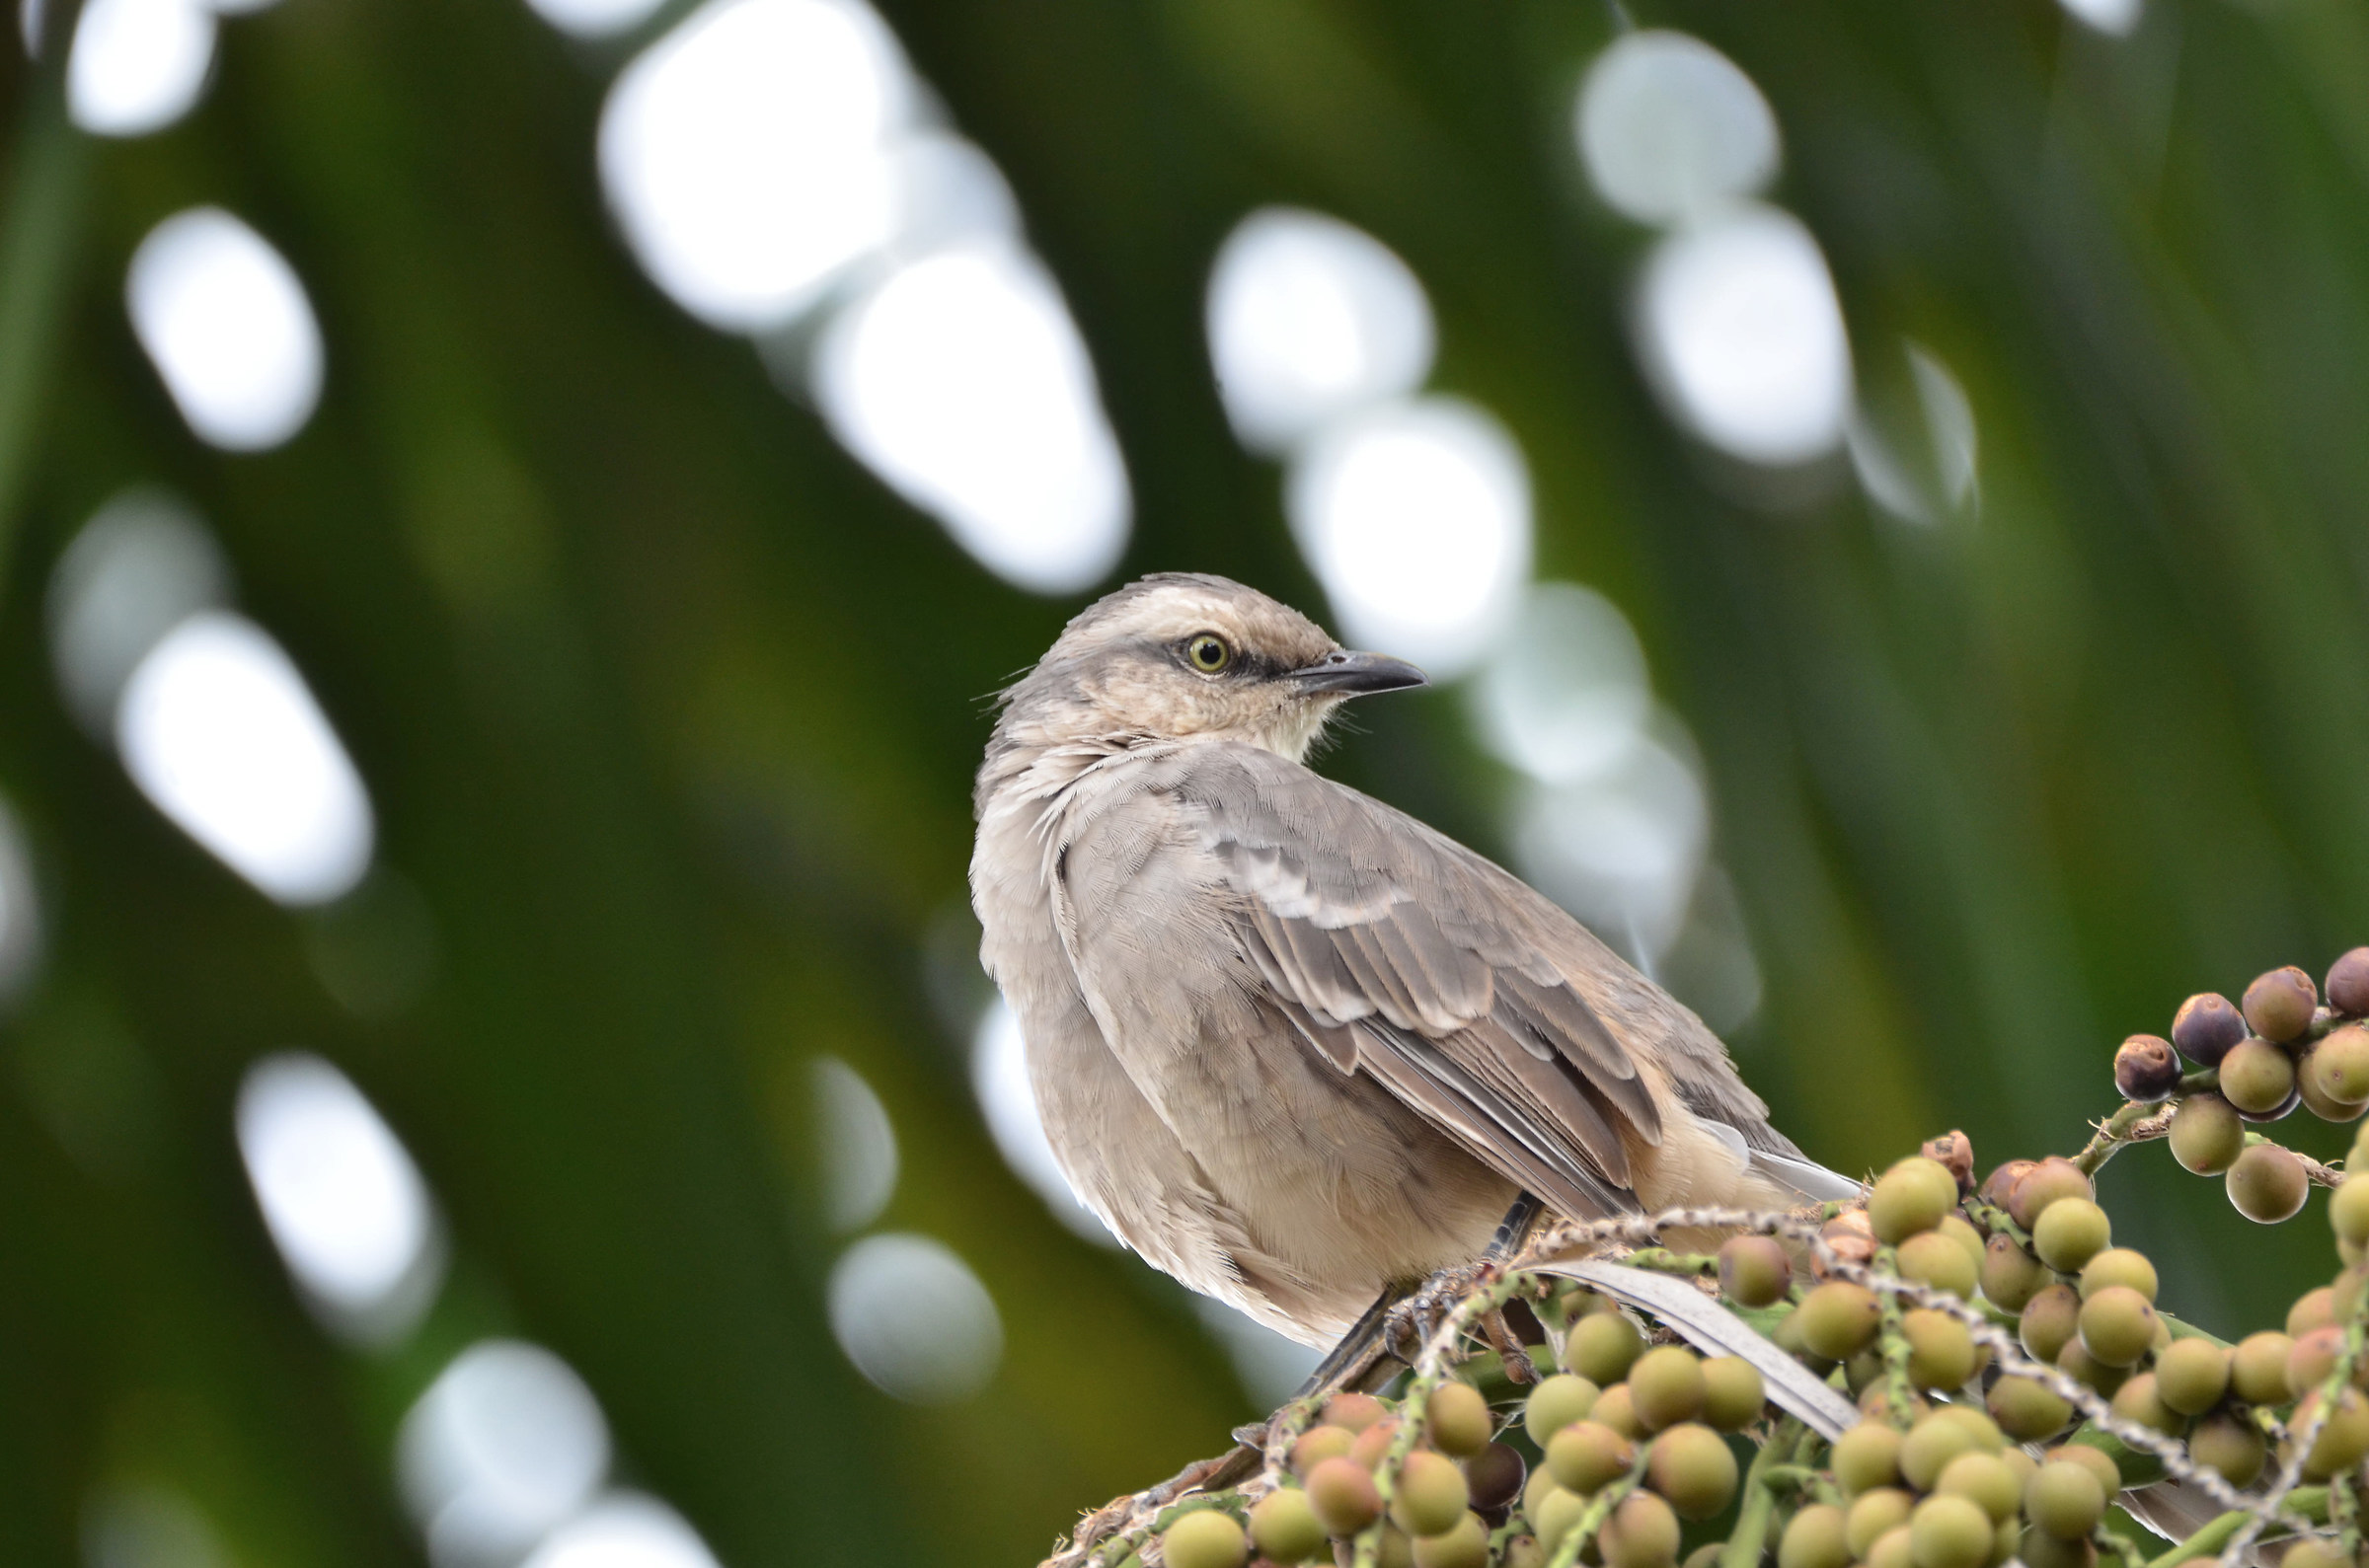 A mocking bird (Mimus saturninus) loving palm fruits...